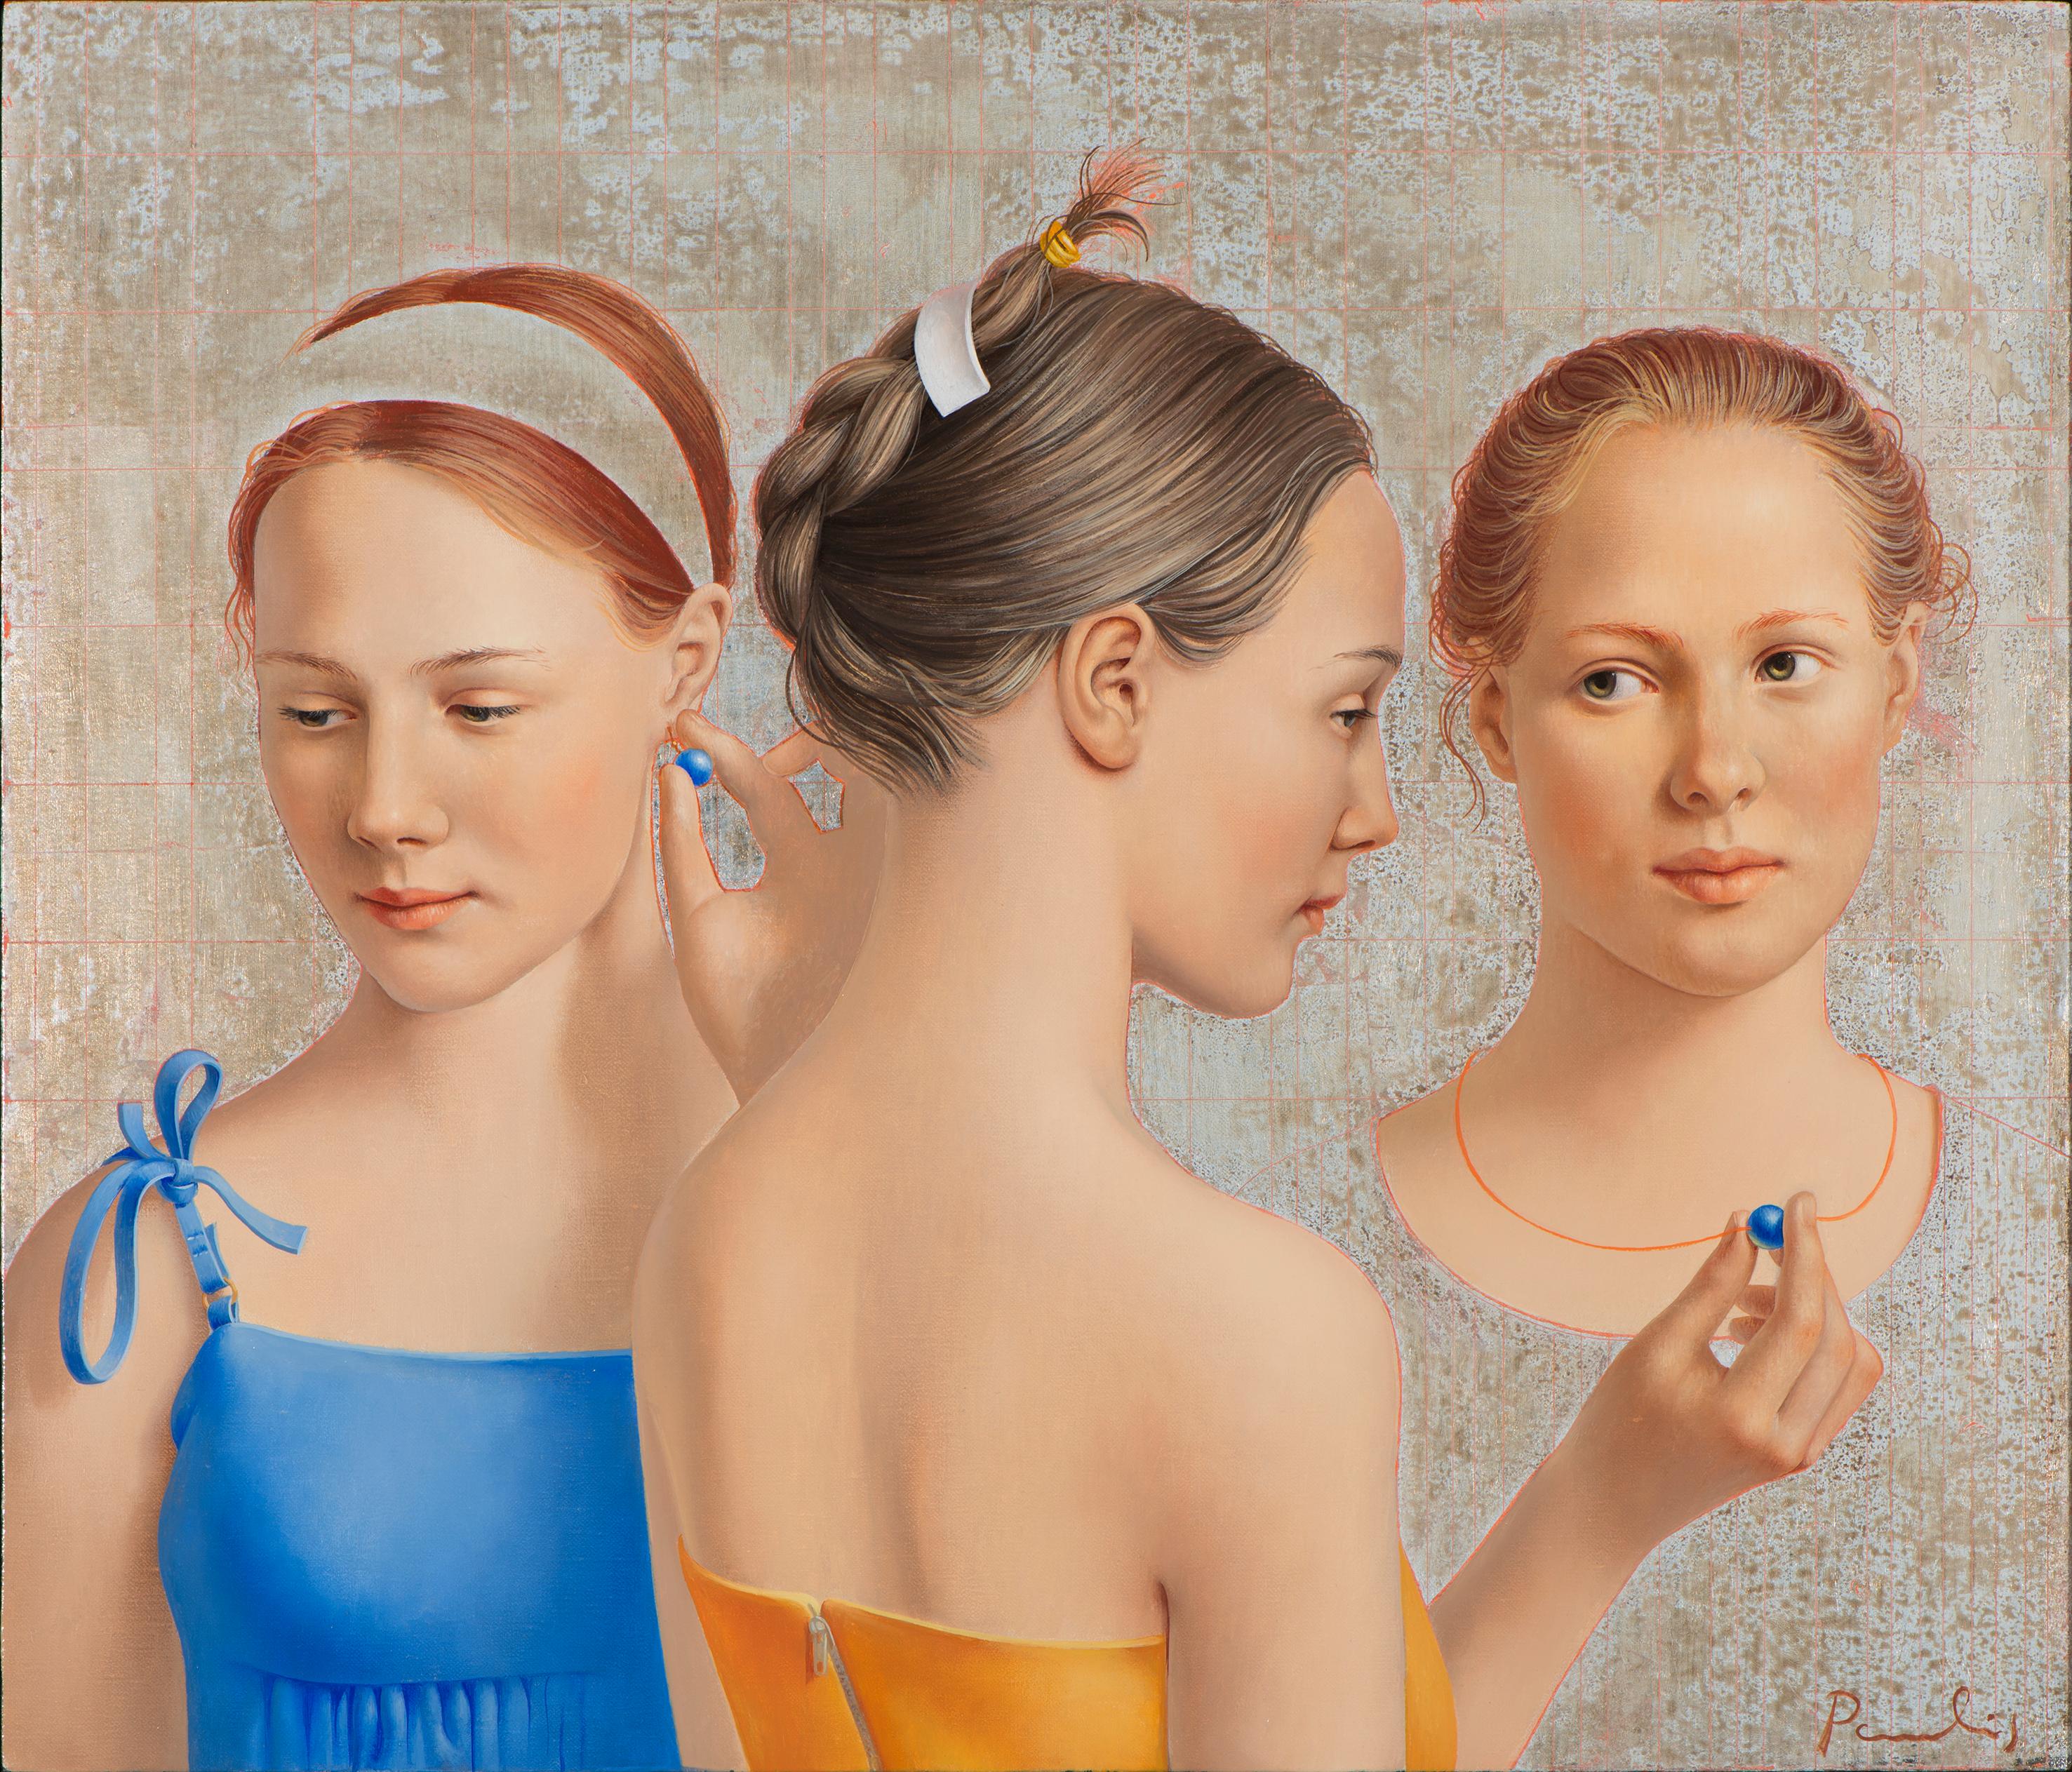 Urban girls. 2021. Oil on canvas, 58x68 cm